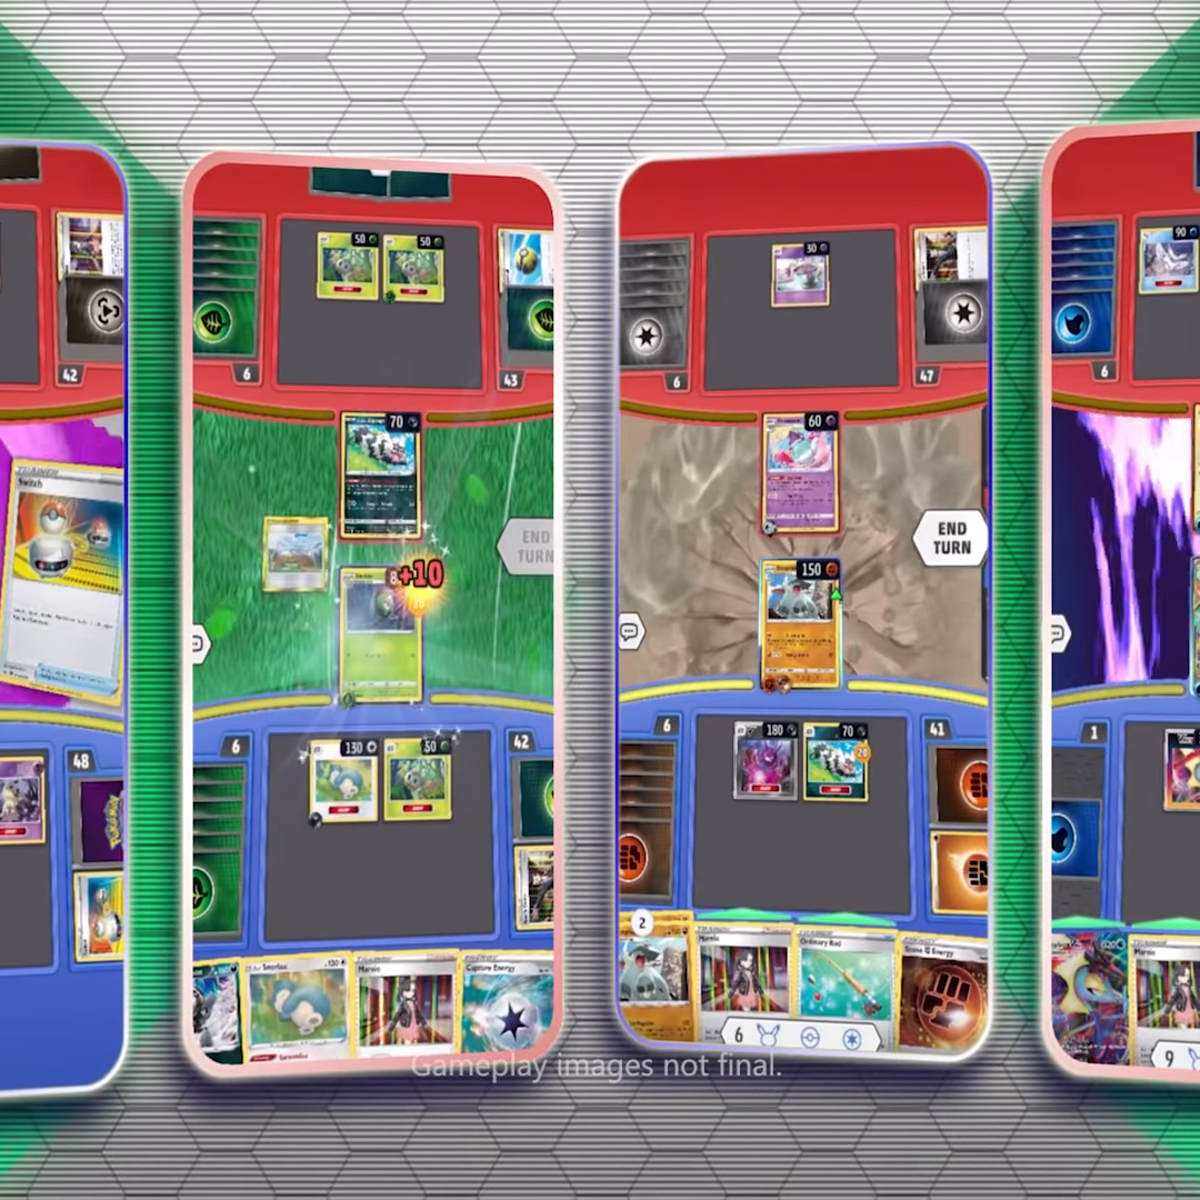 Pokémon TCG teases a new cross-platform digital application